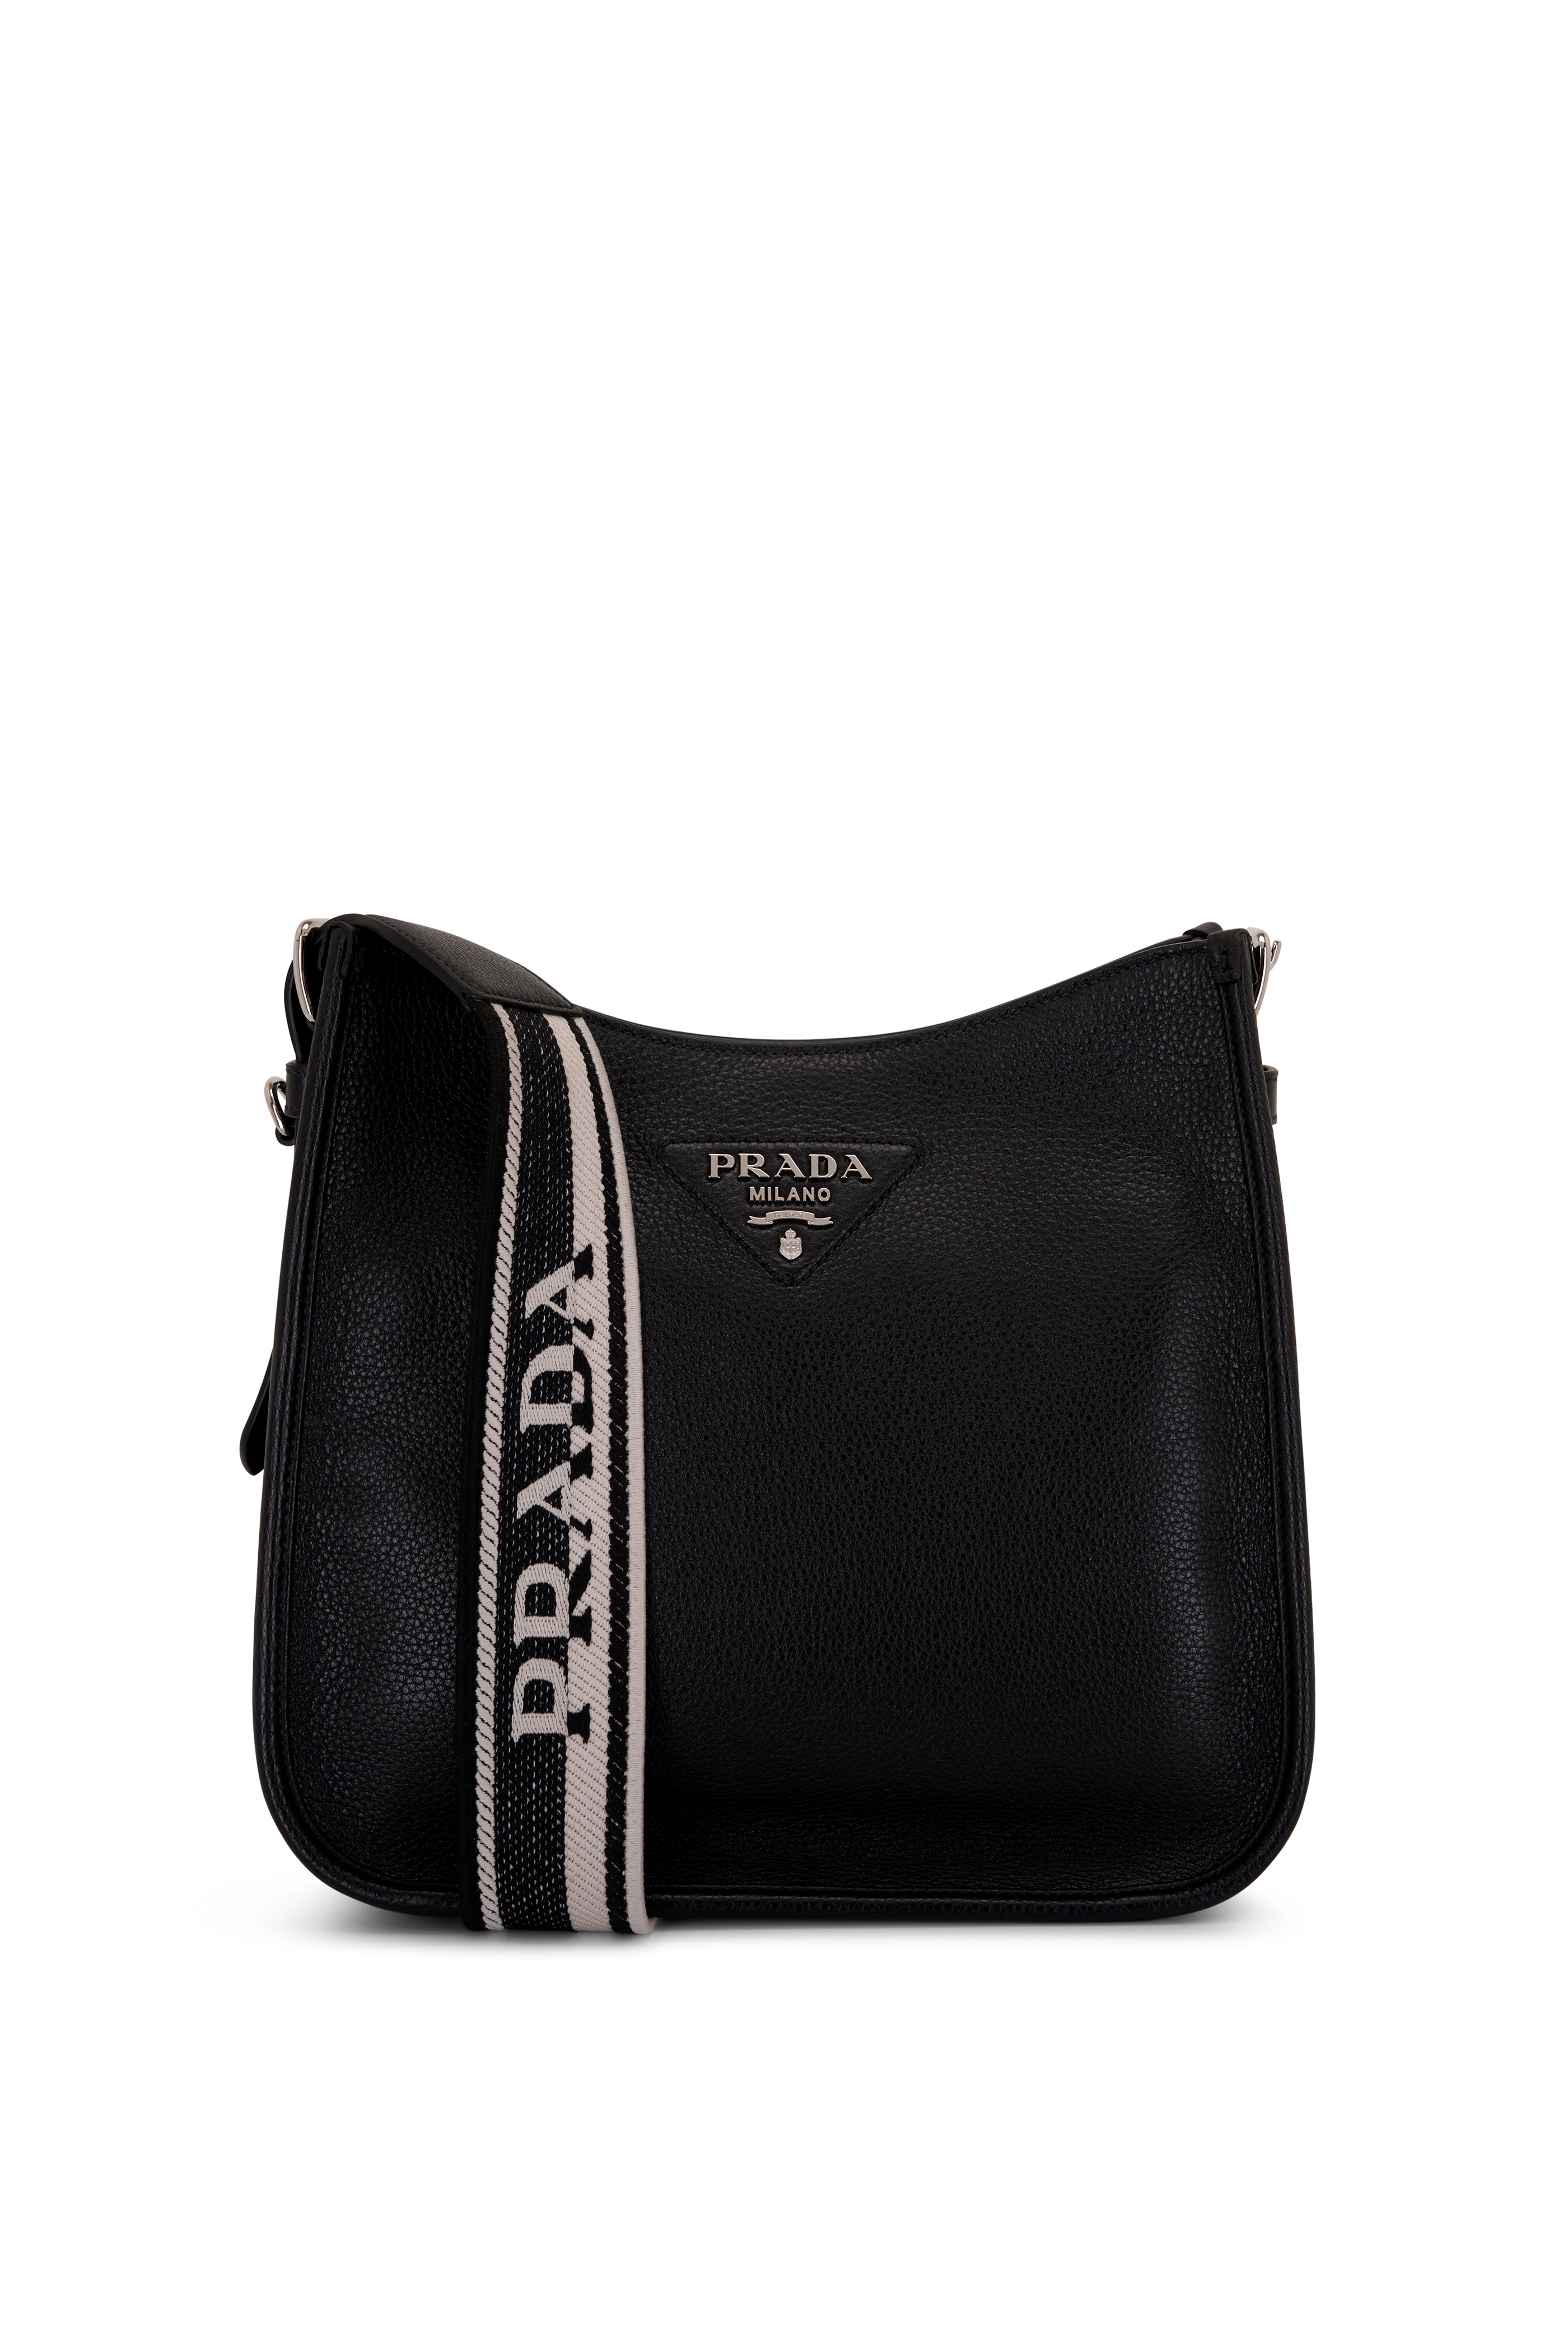 PRADA Saffiano Cuir Monochrome Chain Shoulder Bag Cipria 901419